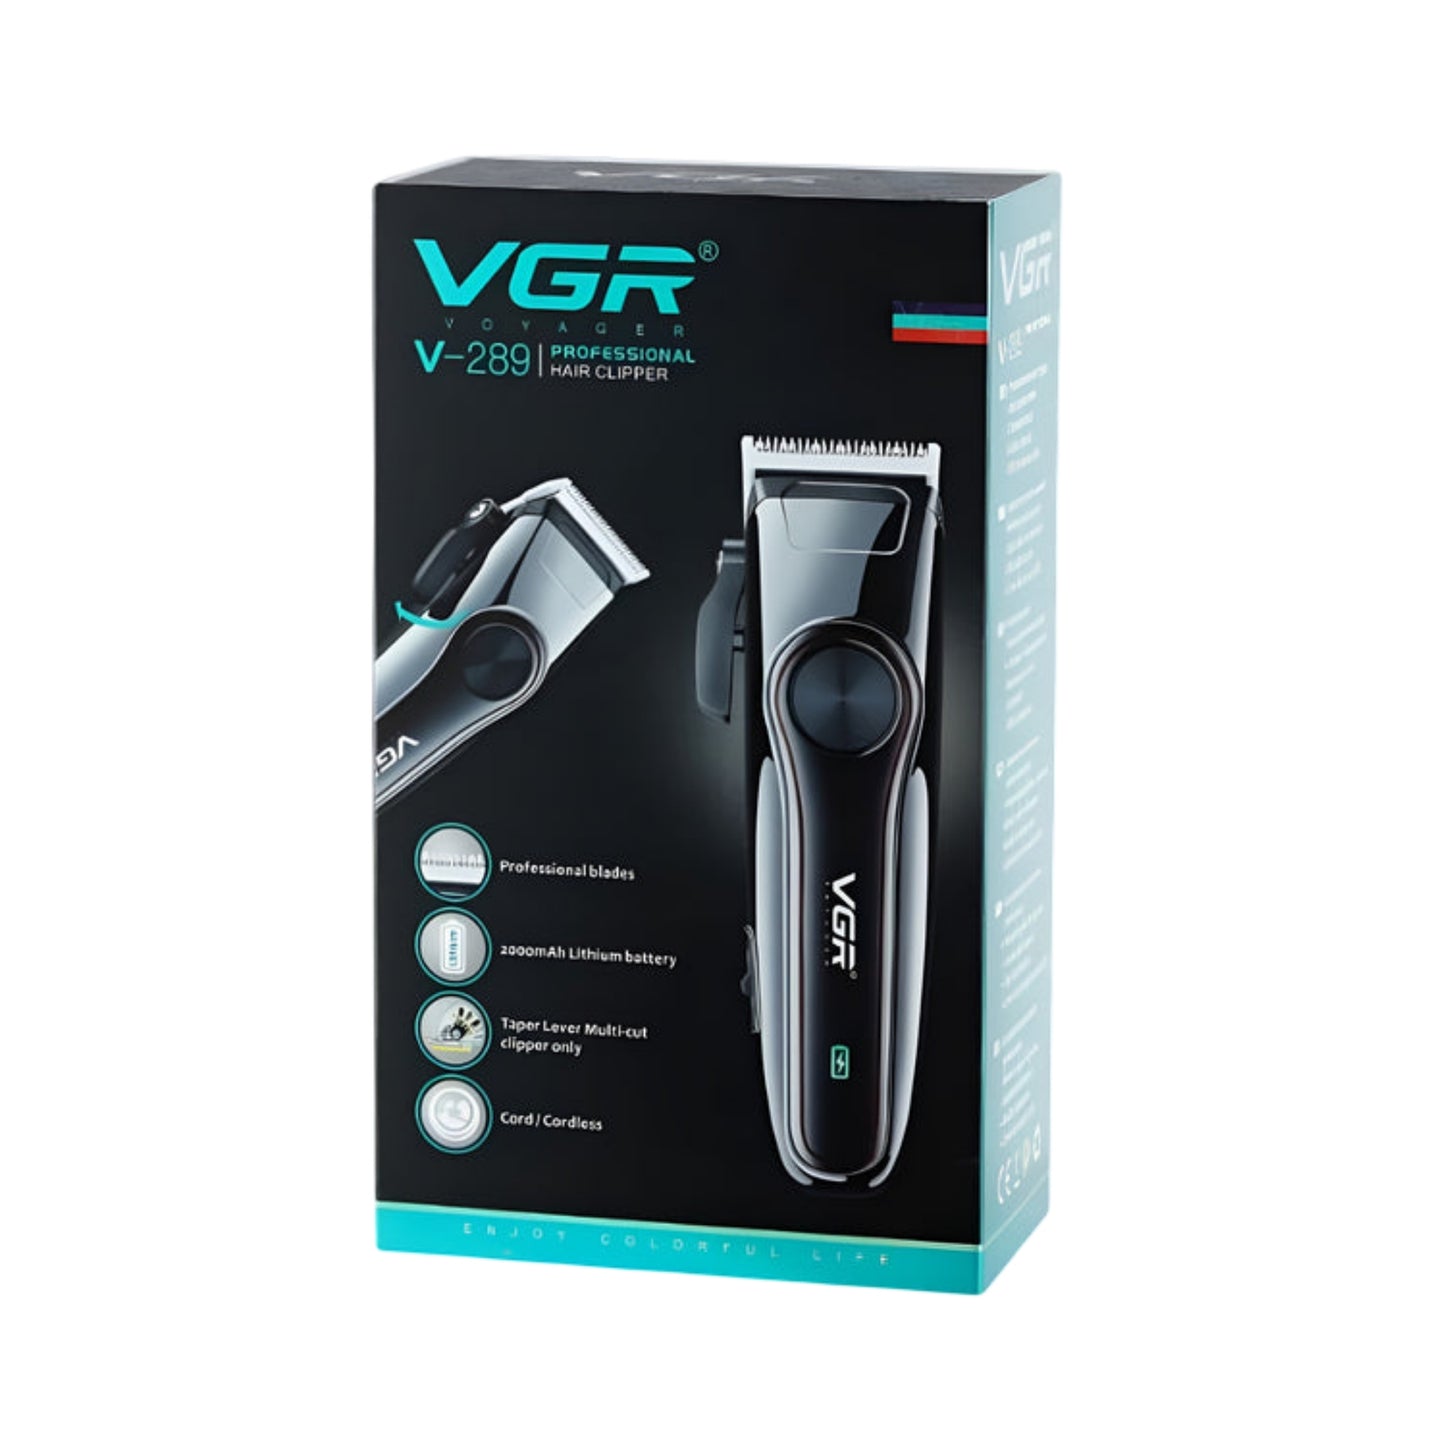 VGR V-289 10W USB Home Portable Hair Clipper